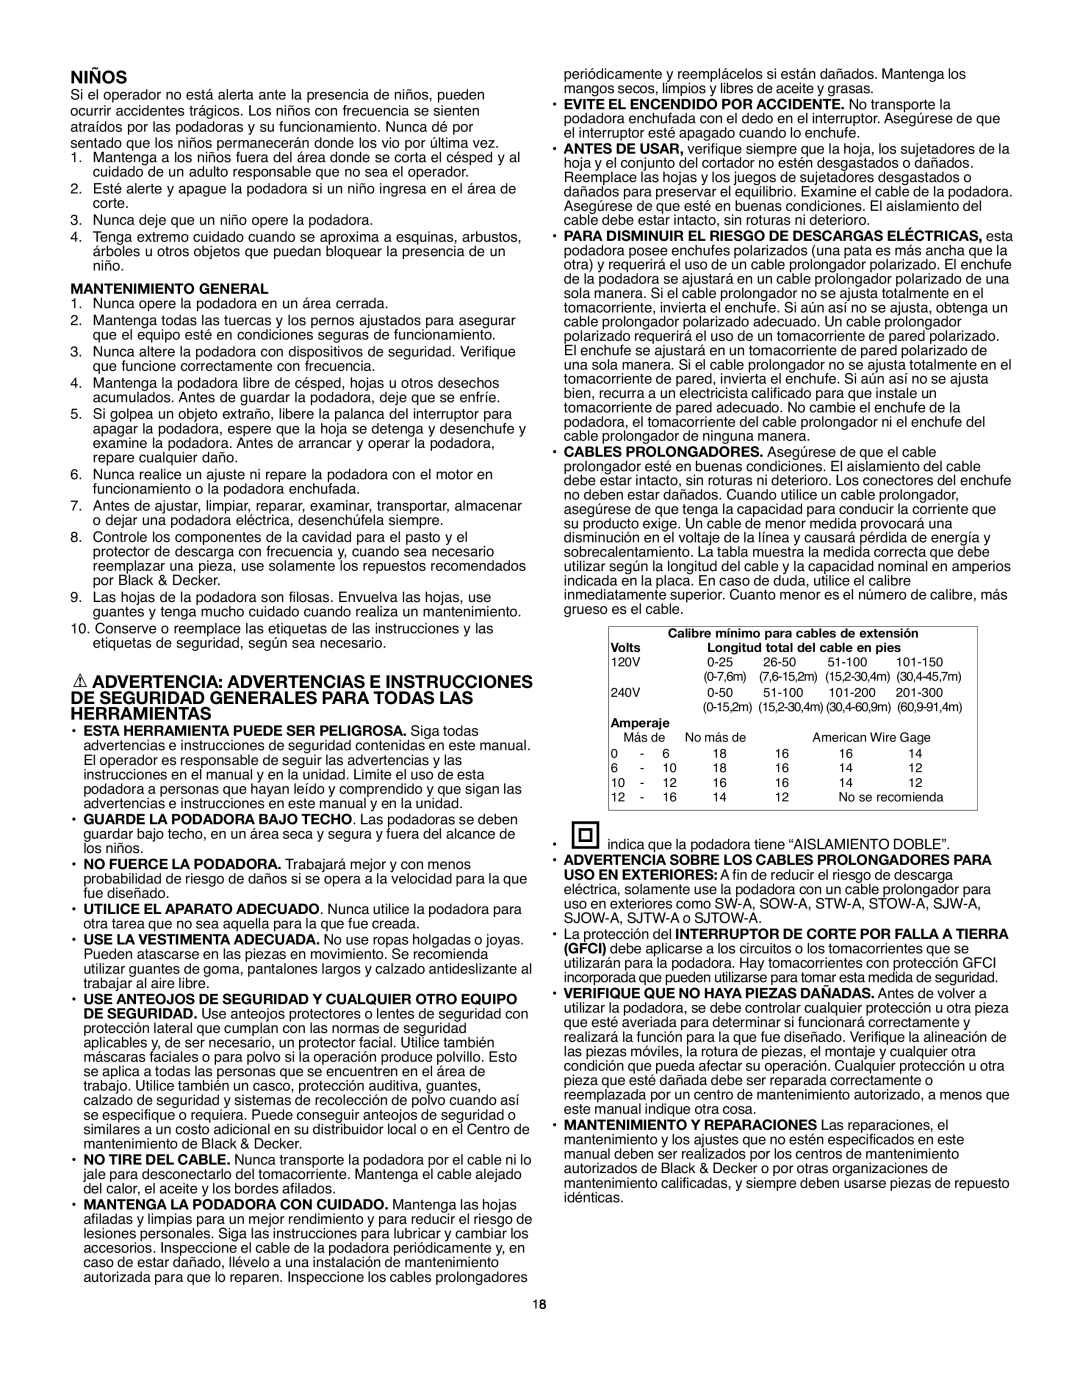 Black & Decker LM175 instruction manual Niños 